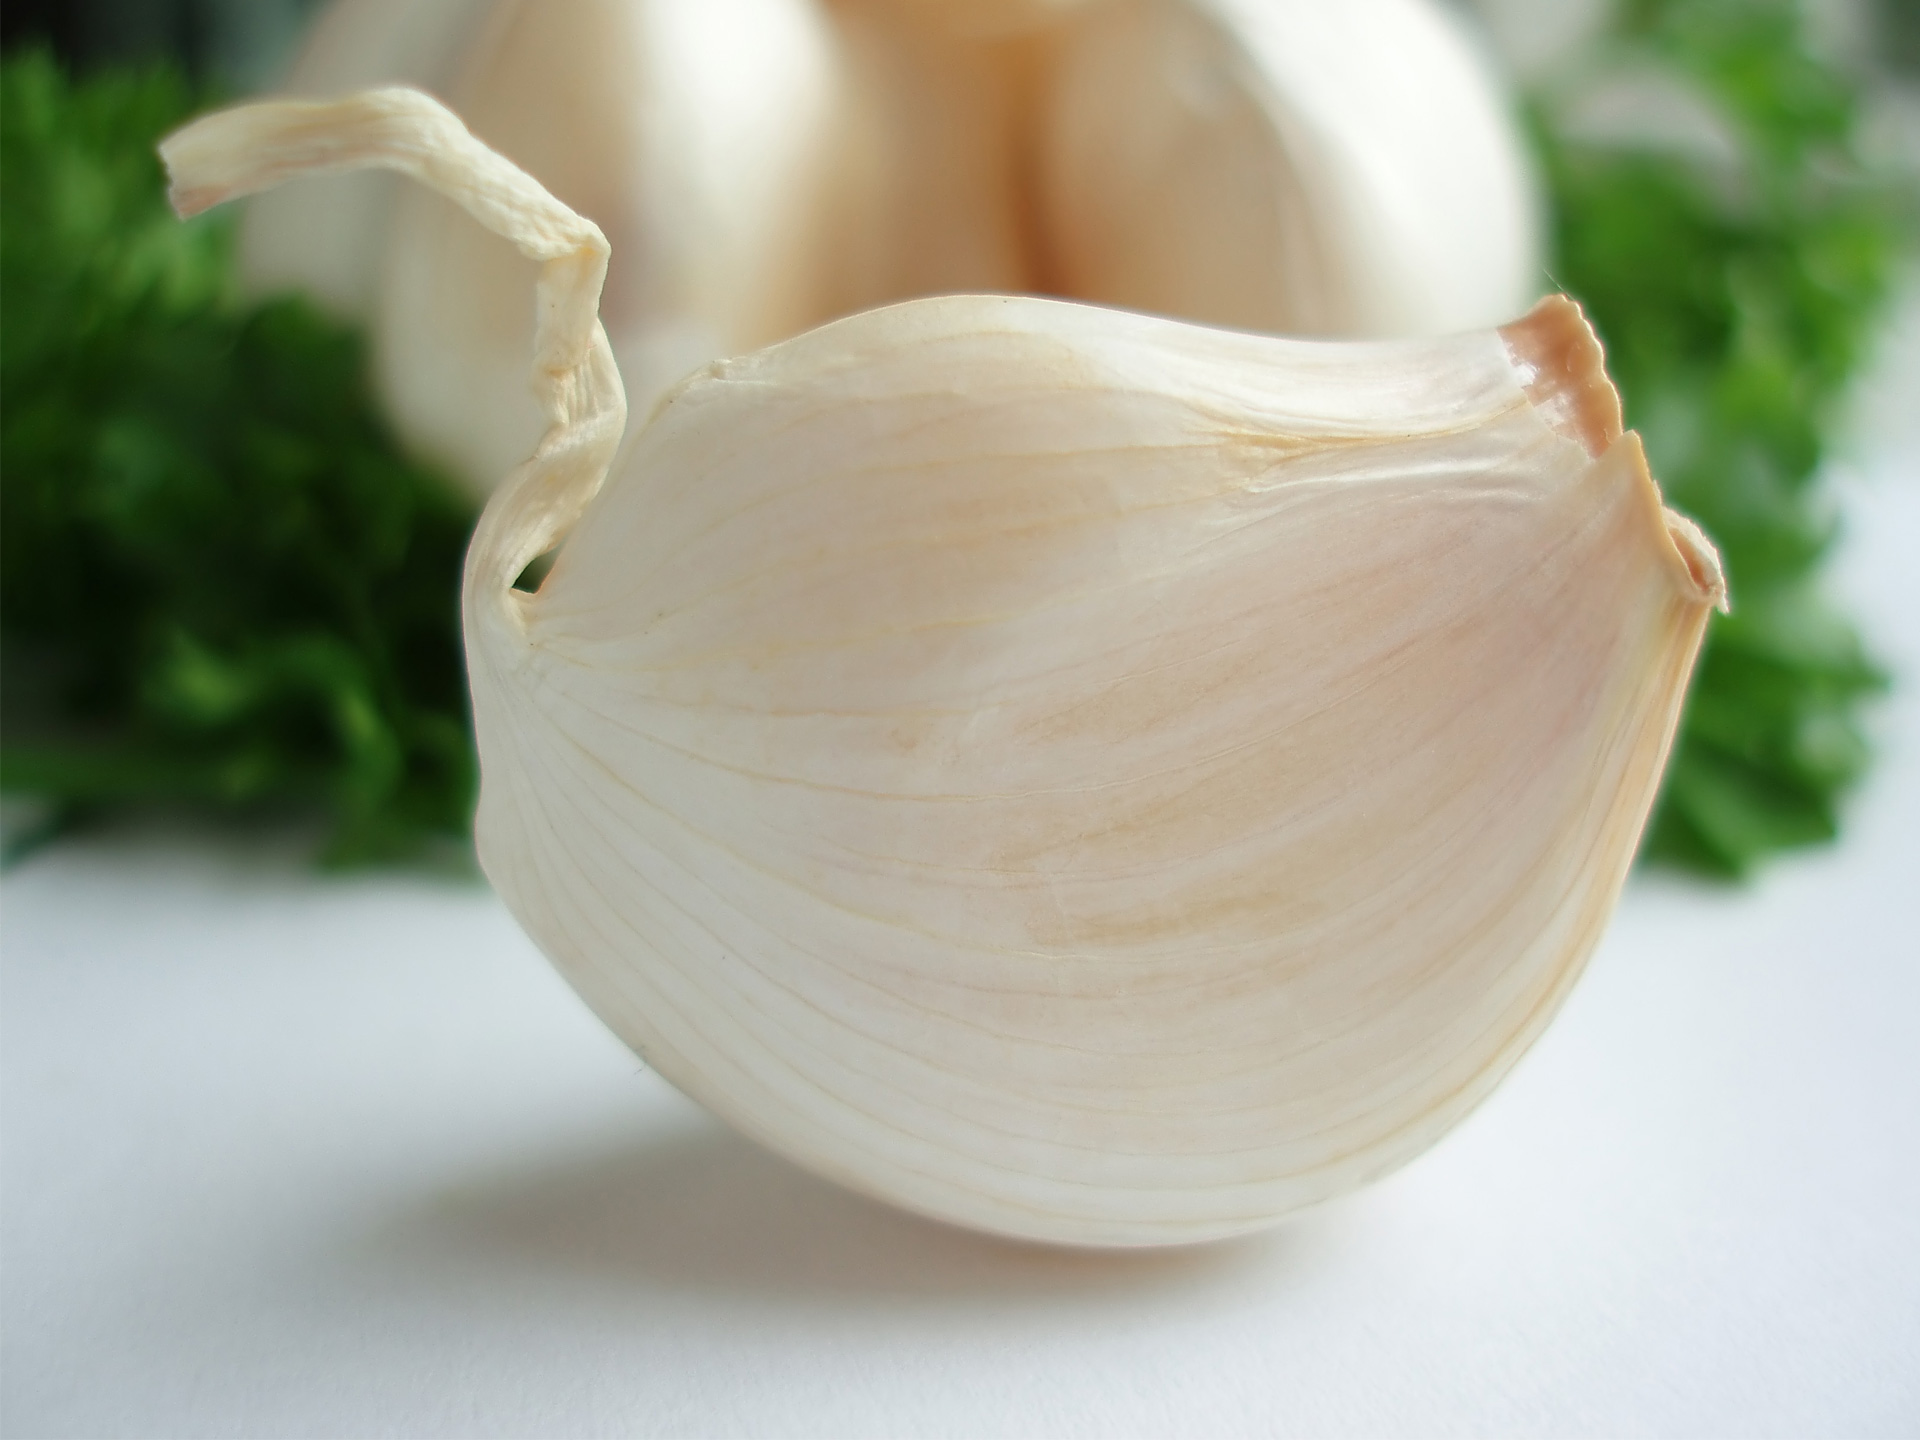 Garlic, a powerful culinary & medicinal herb